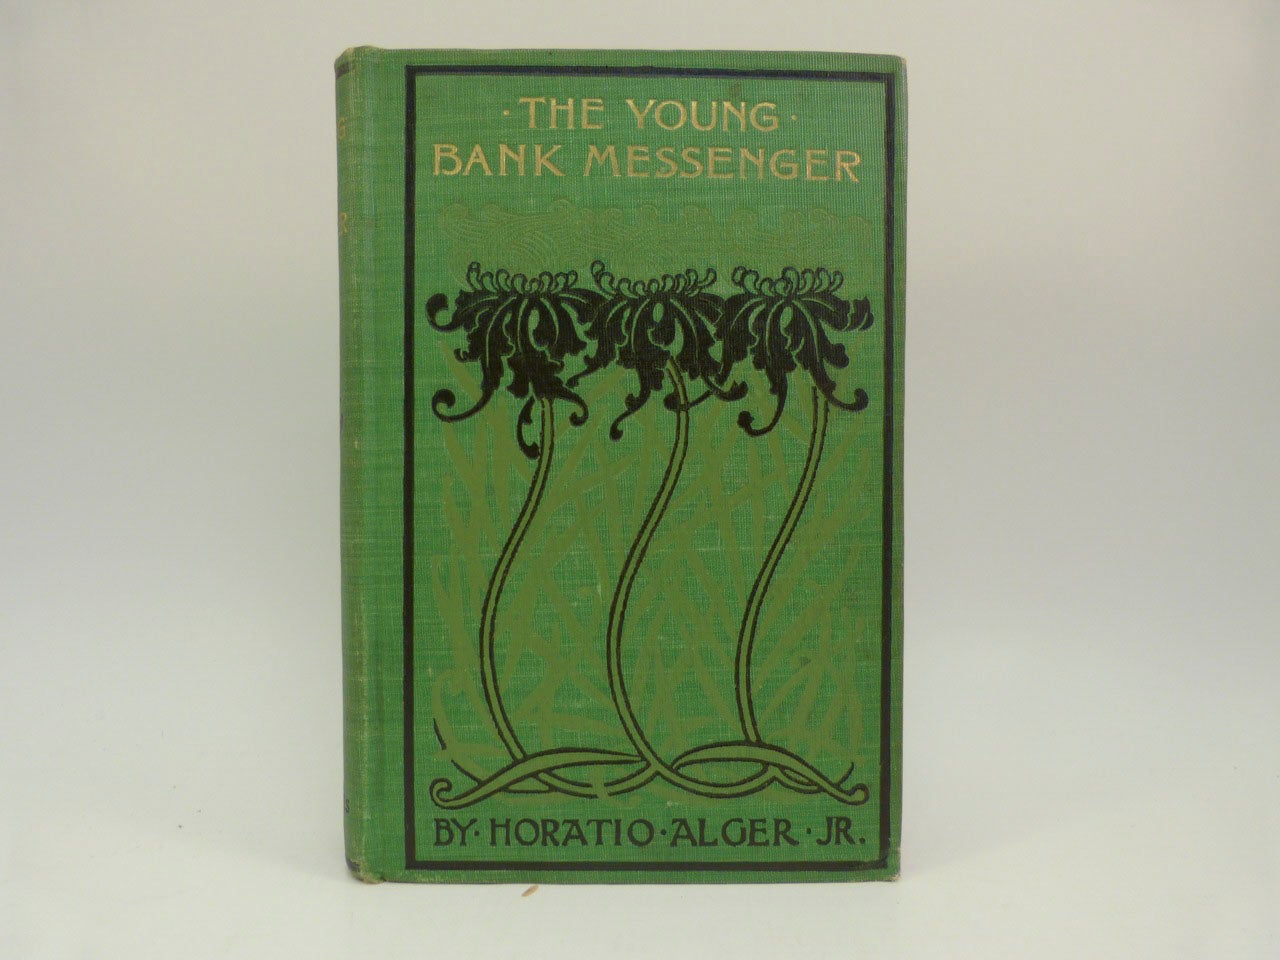 Alger, Horatio (Jr.) - The Young Bank Messenger